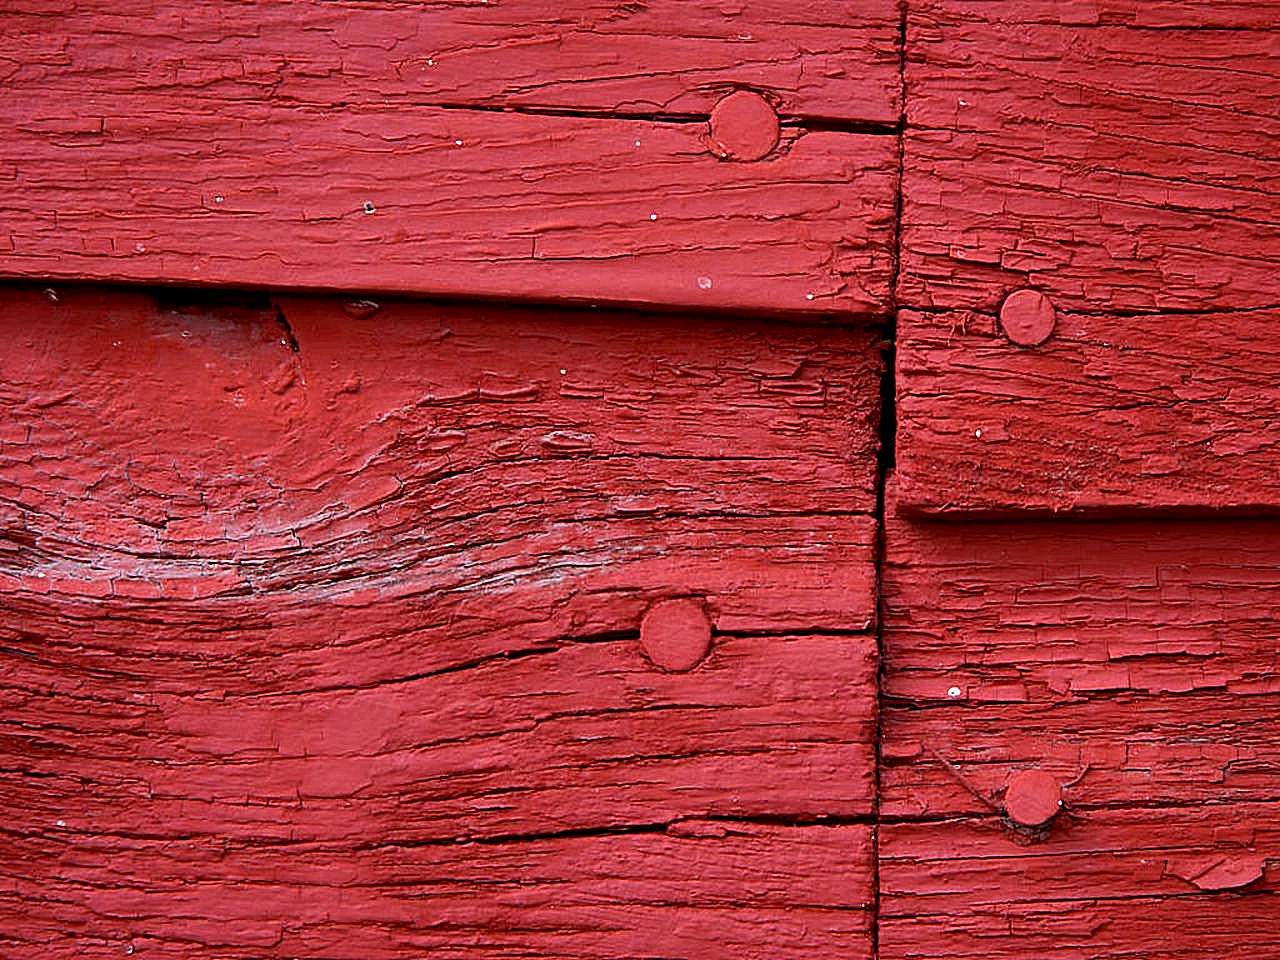 red paint, texture paints, background, download photo, red color paint texture background